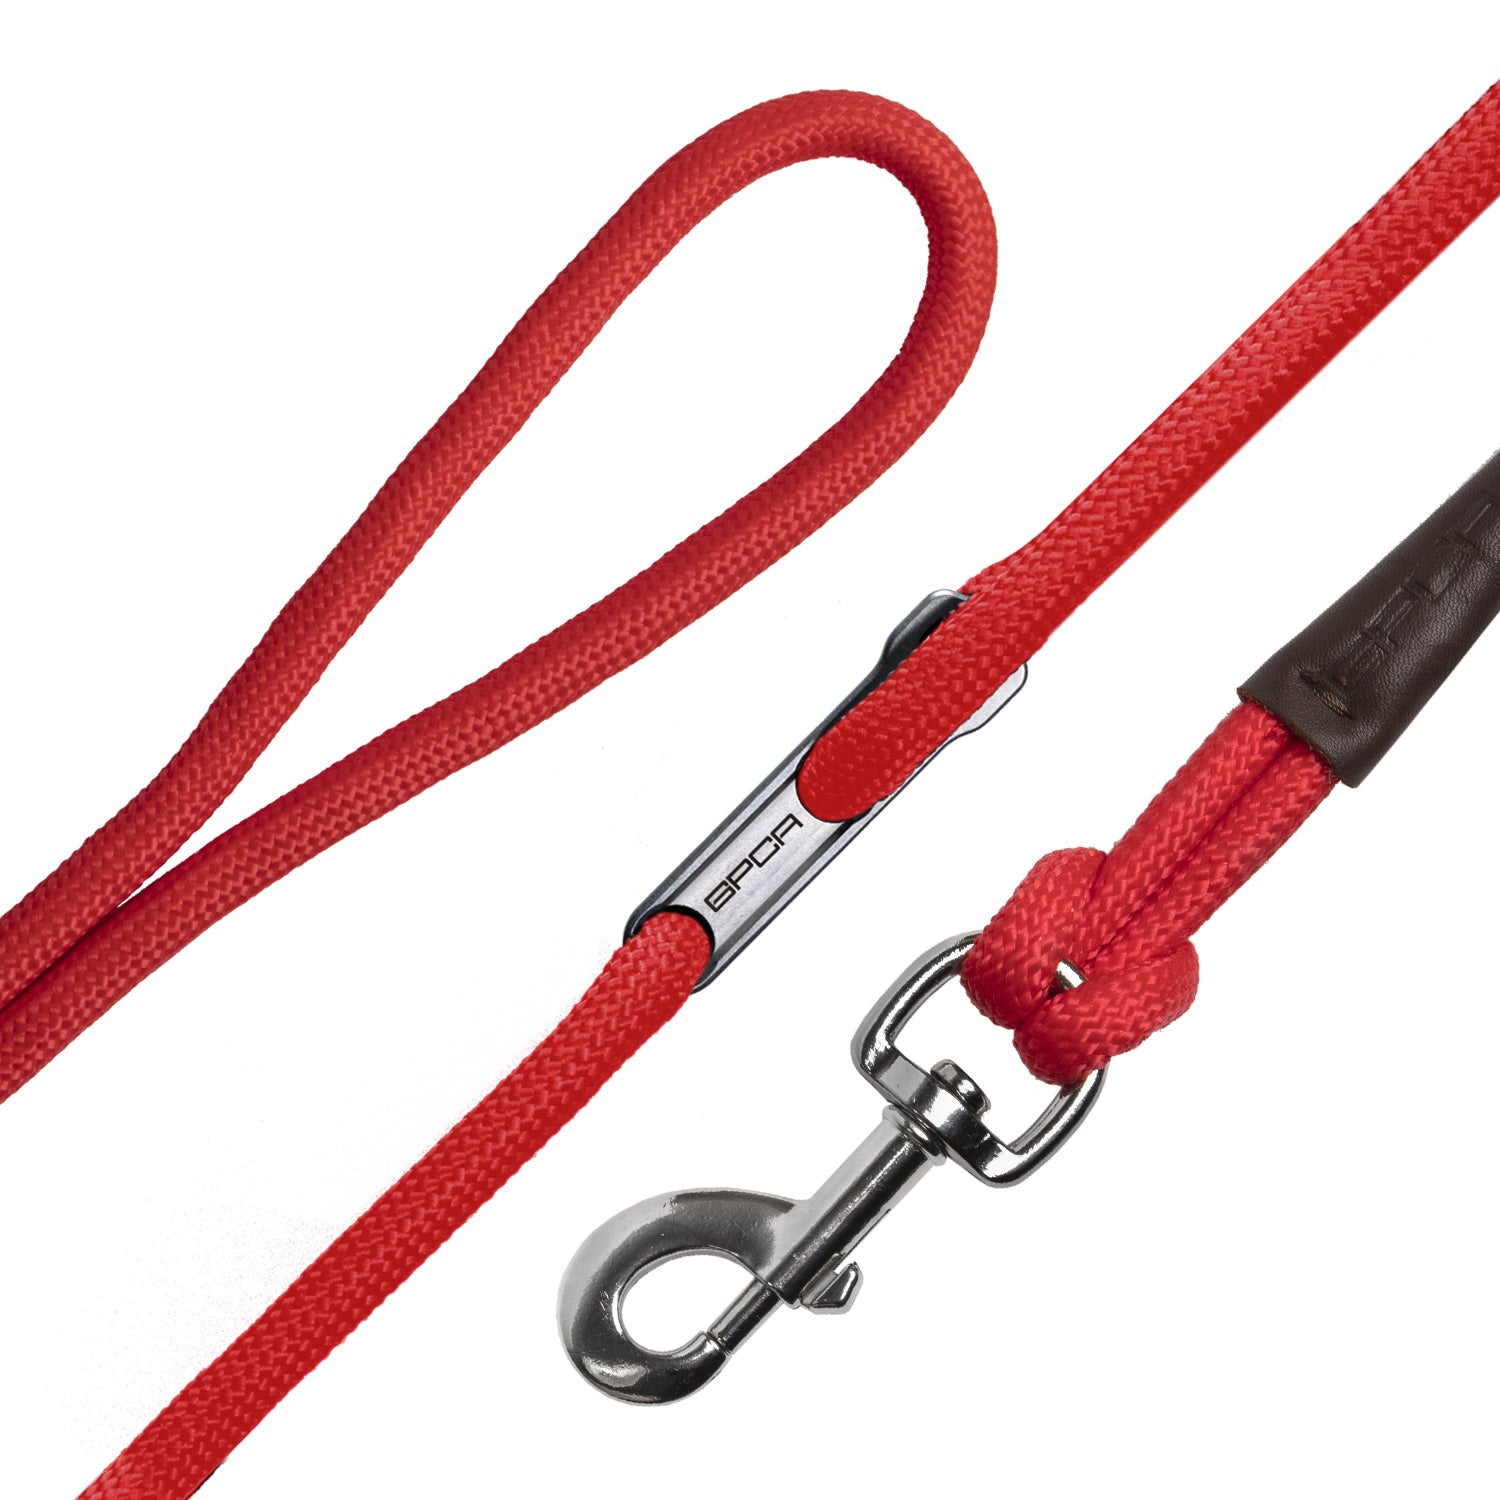 GPCA Dog Leash Lite Red for your dog, adjustable on the go leash